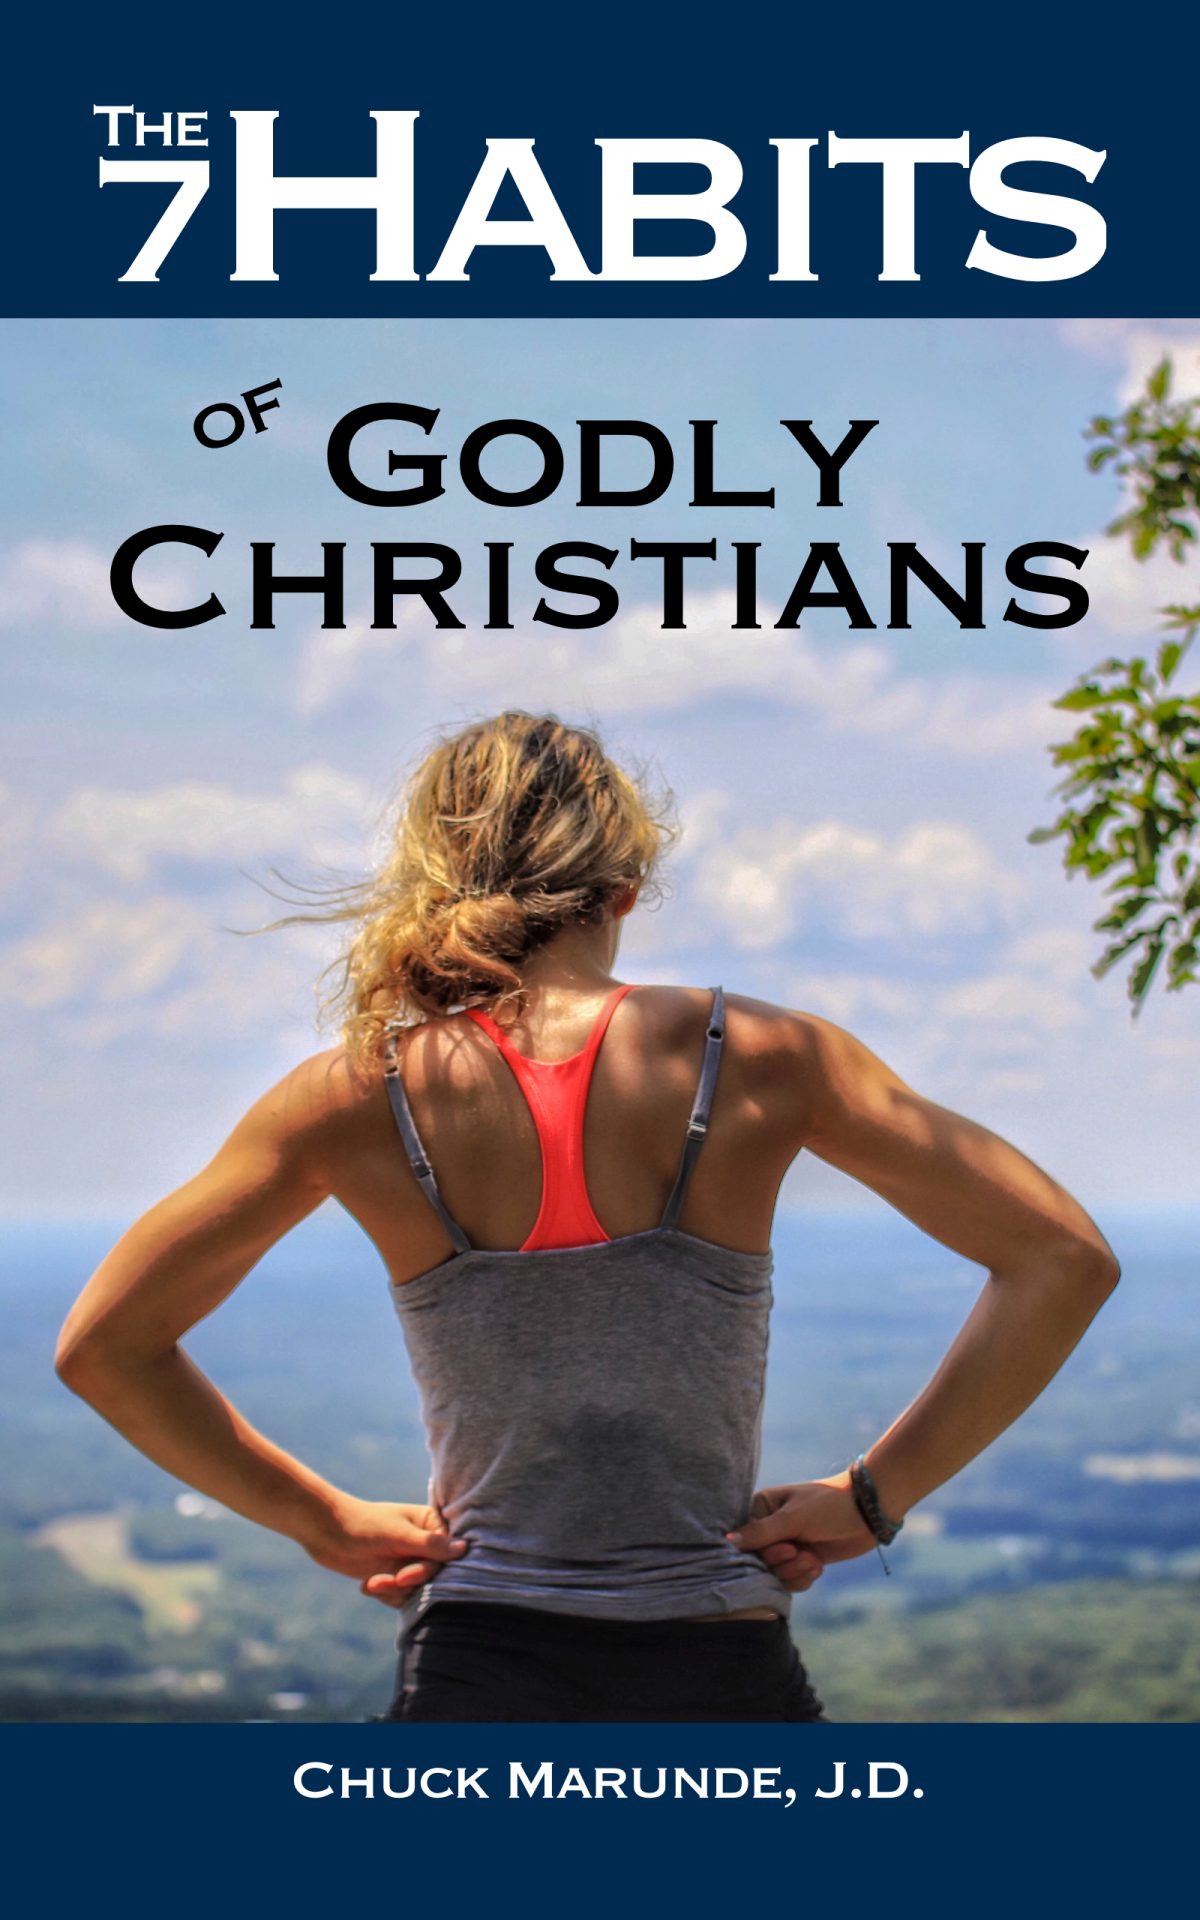 7 Habits of Godly Christians